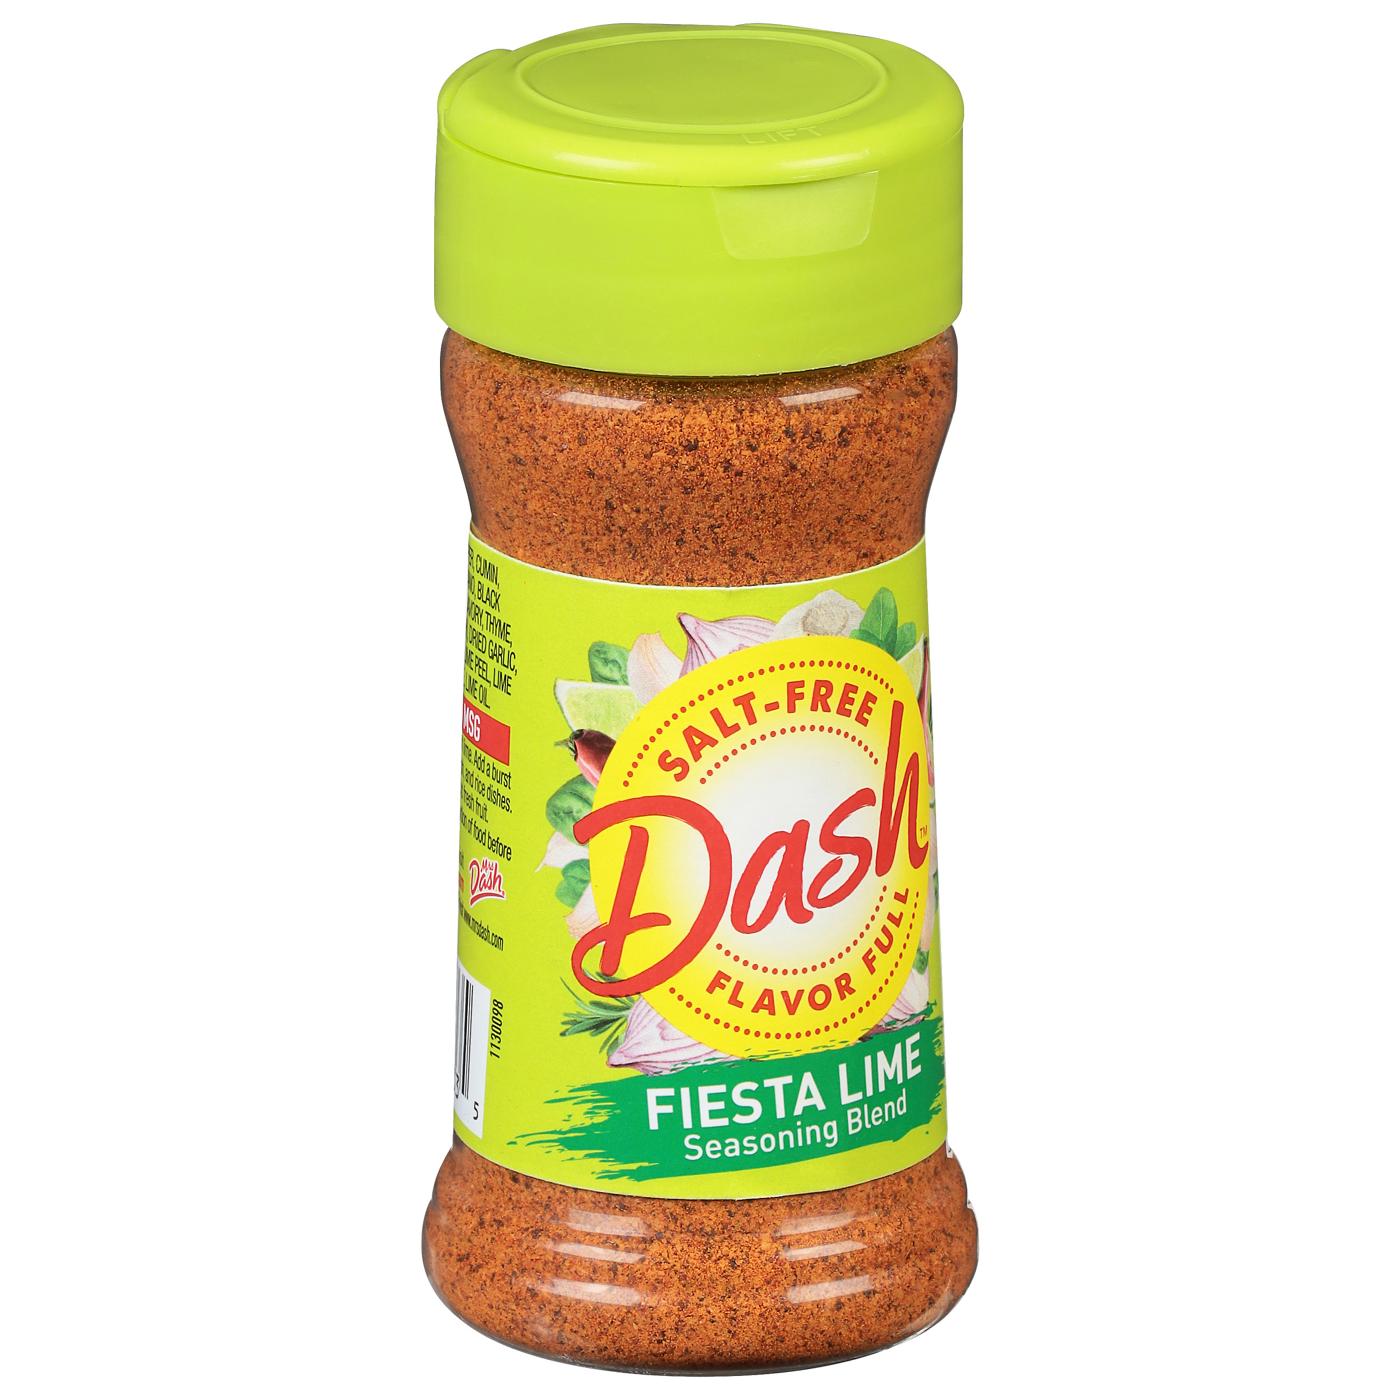 Mrs. Dash Salt-Free Fiesta Lime Seasoning Blend - Shop Spice Mixes at H-E-B